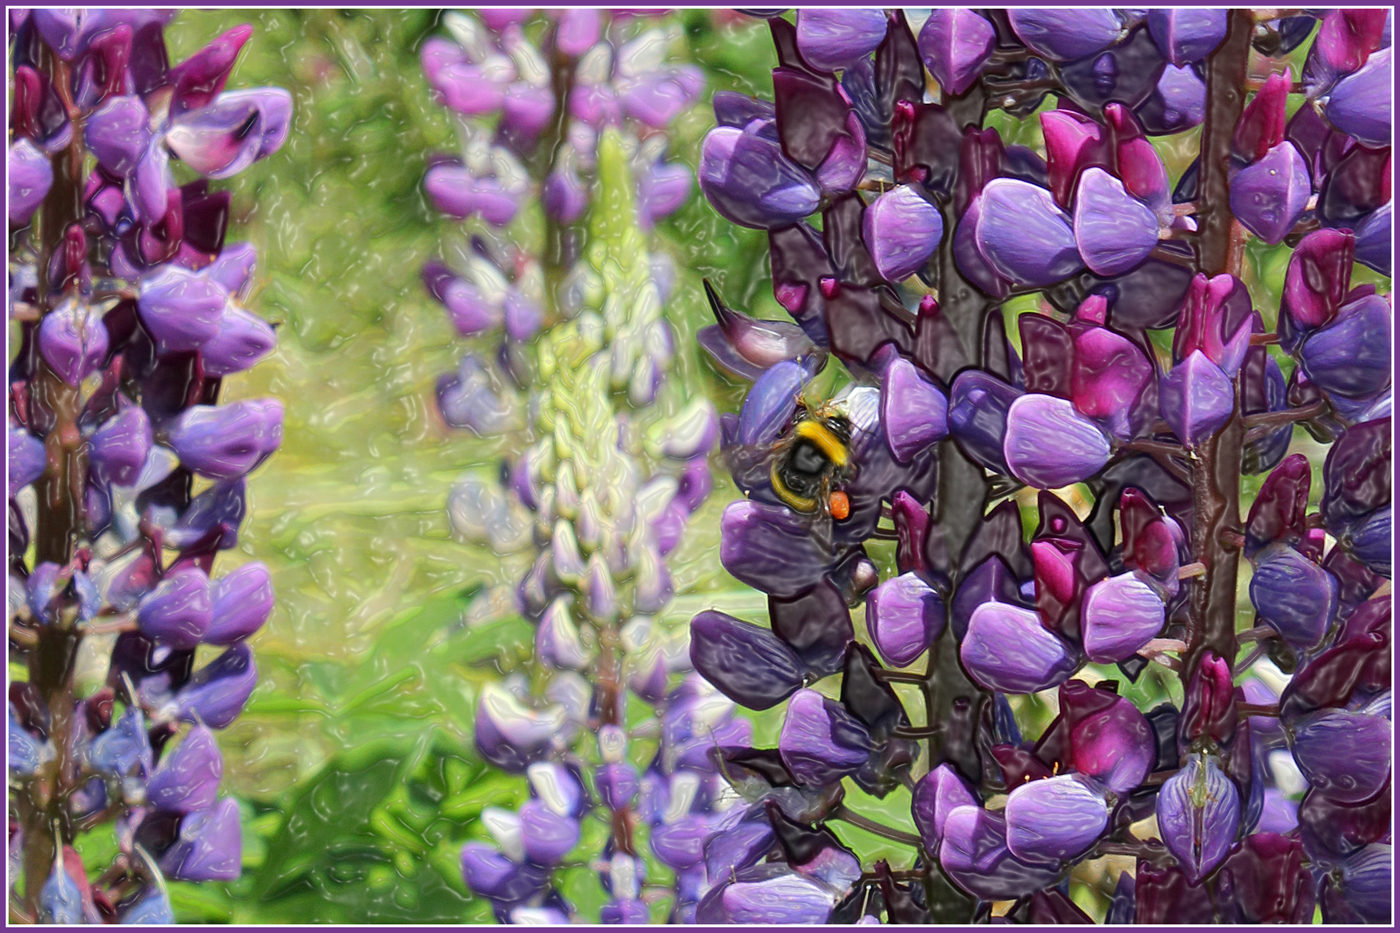 roberta houston - Bee Collecting Pollen